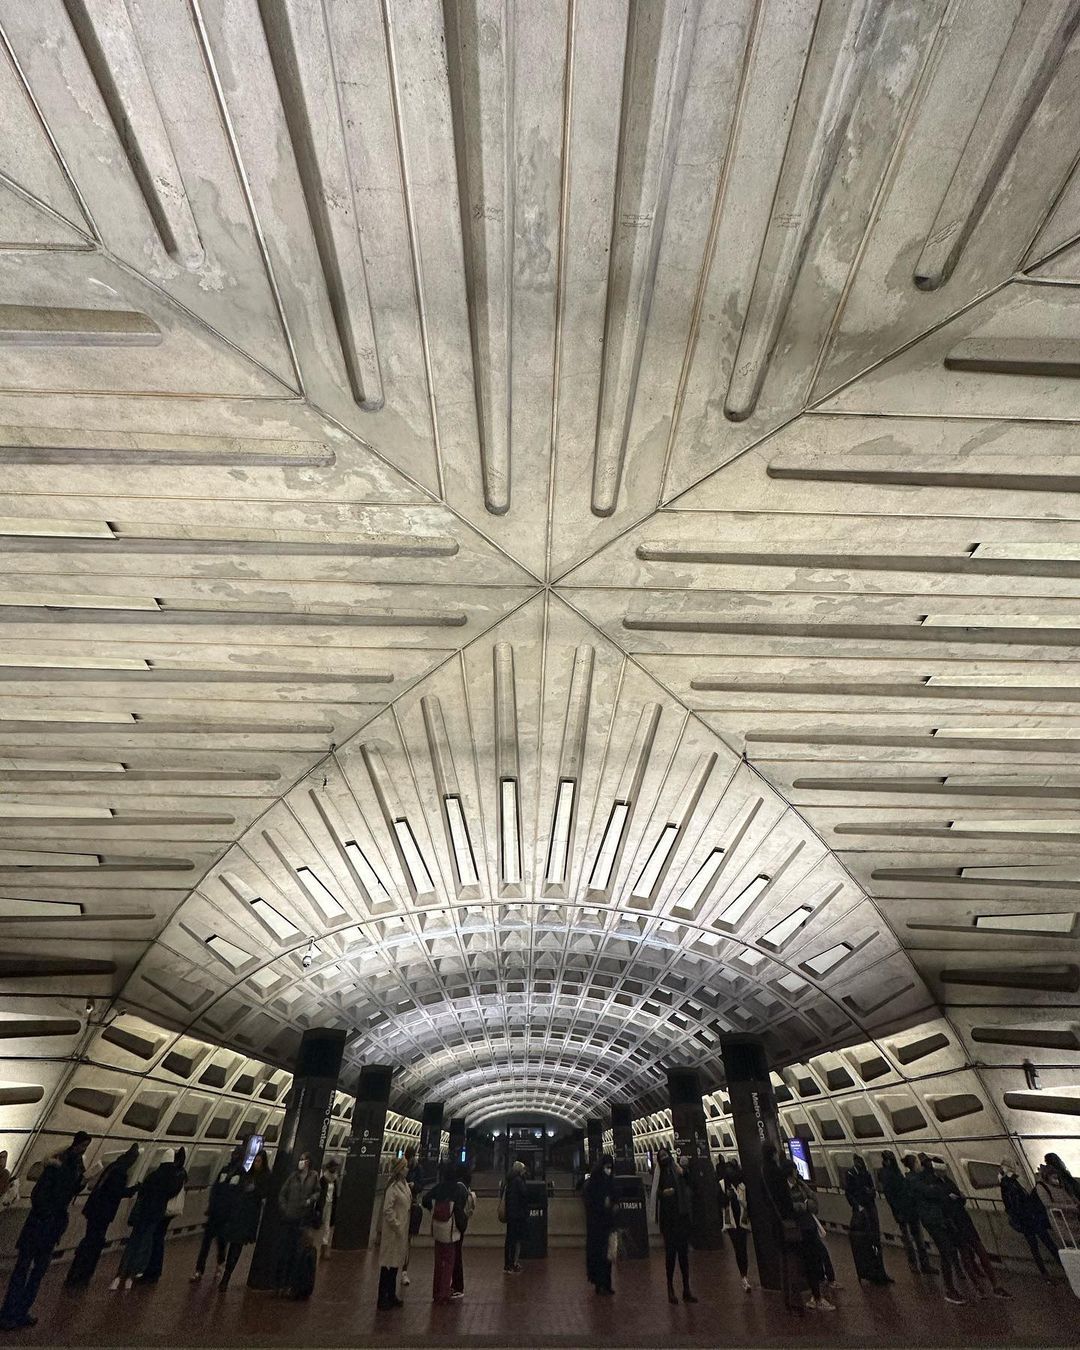 Before. After. #metro #wmata (at Metro Center Station)
https://www.instagram.com/p/CncvCpzPRPm/?igshid=NGJjMDIxMWI=